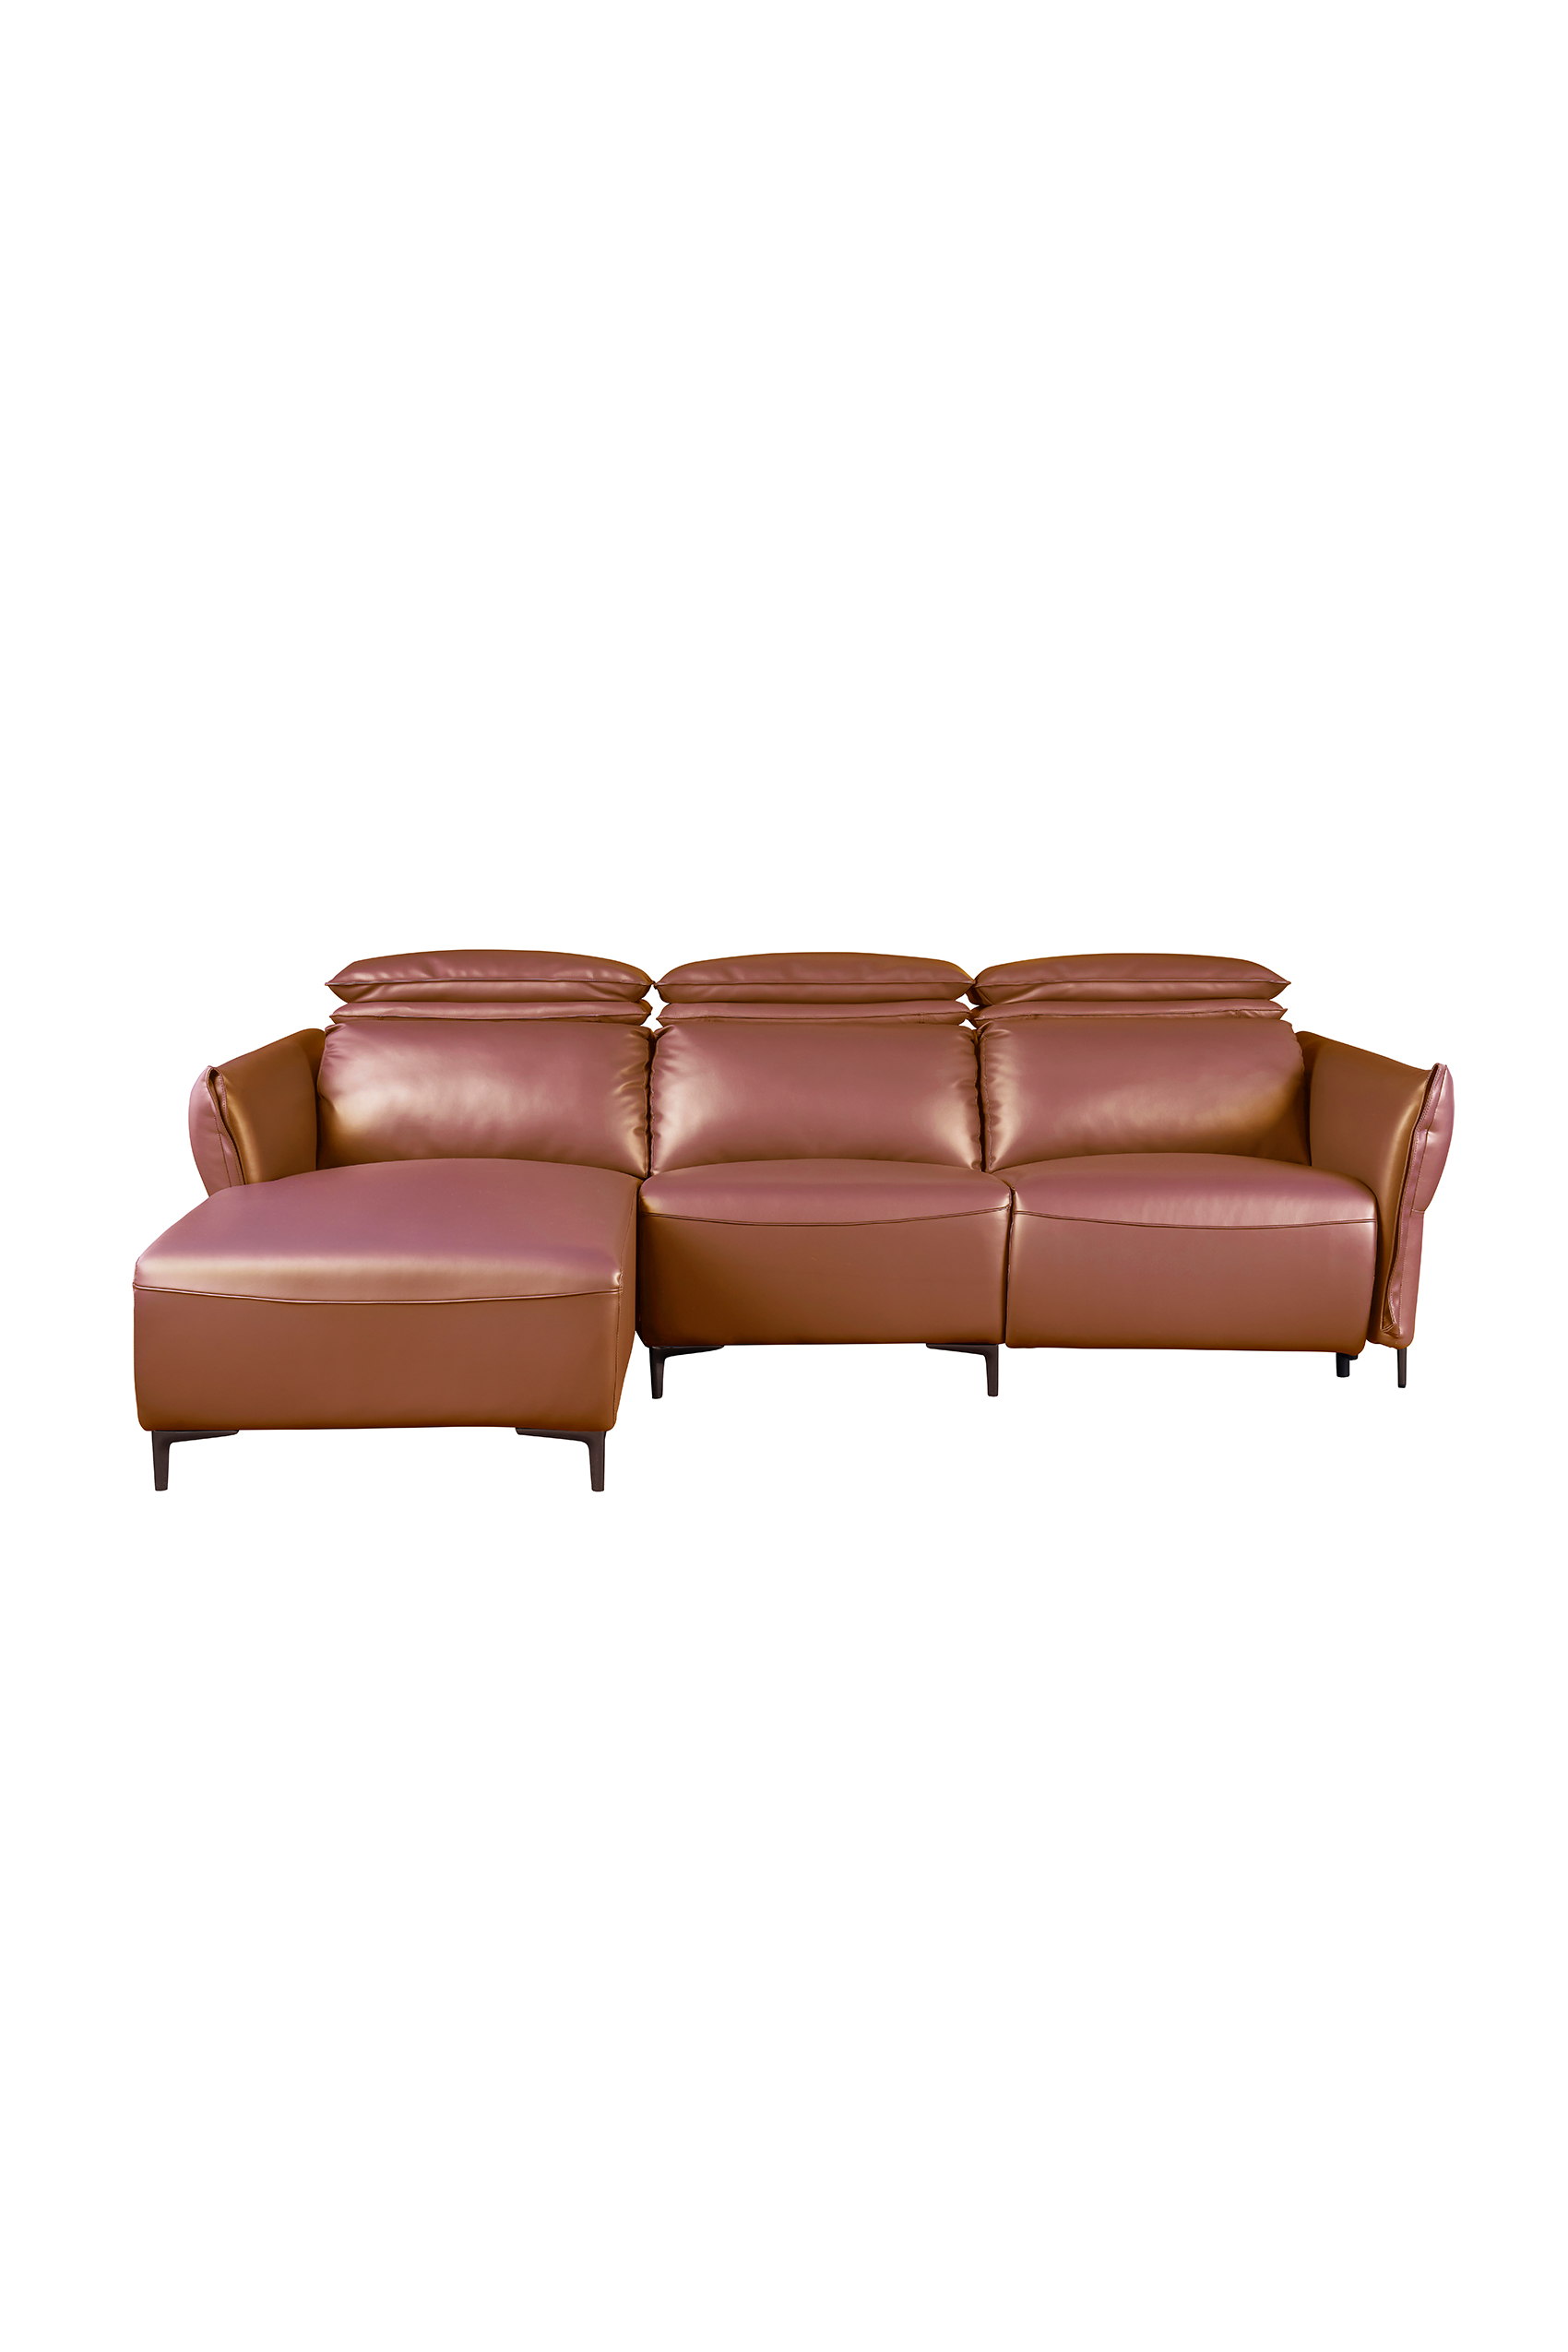 Sarnano L-Shape Leather Sofa